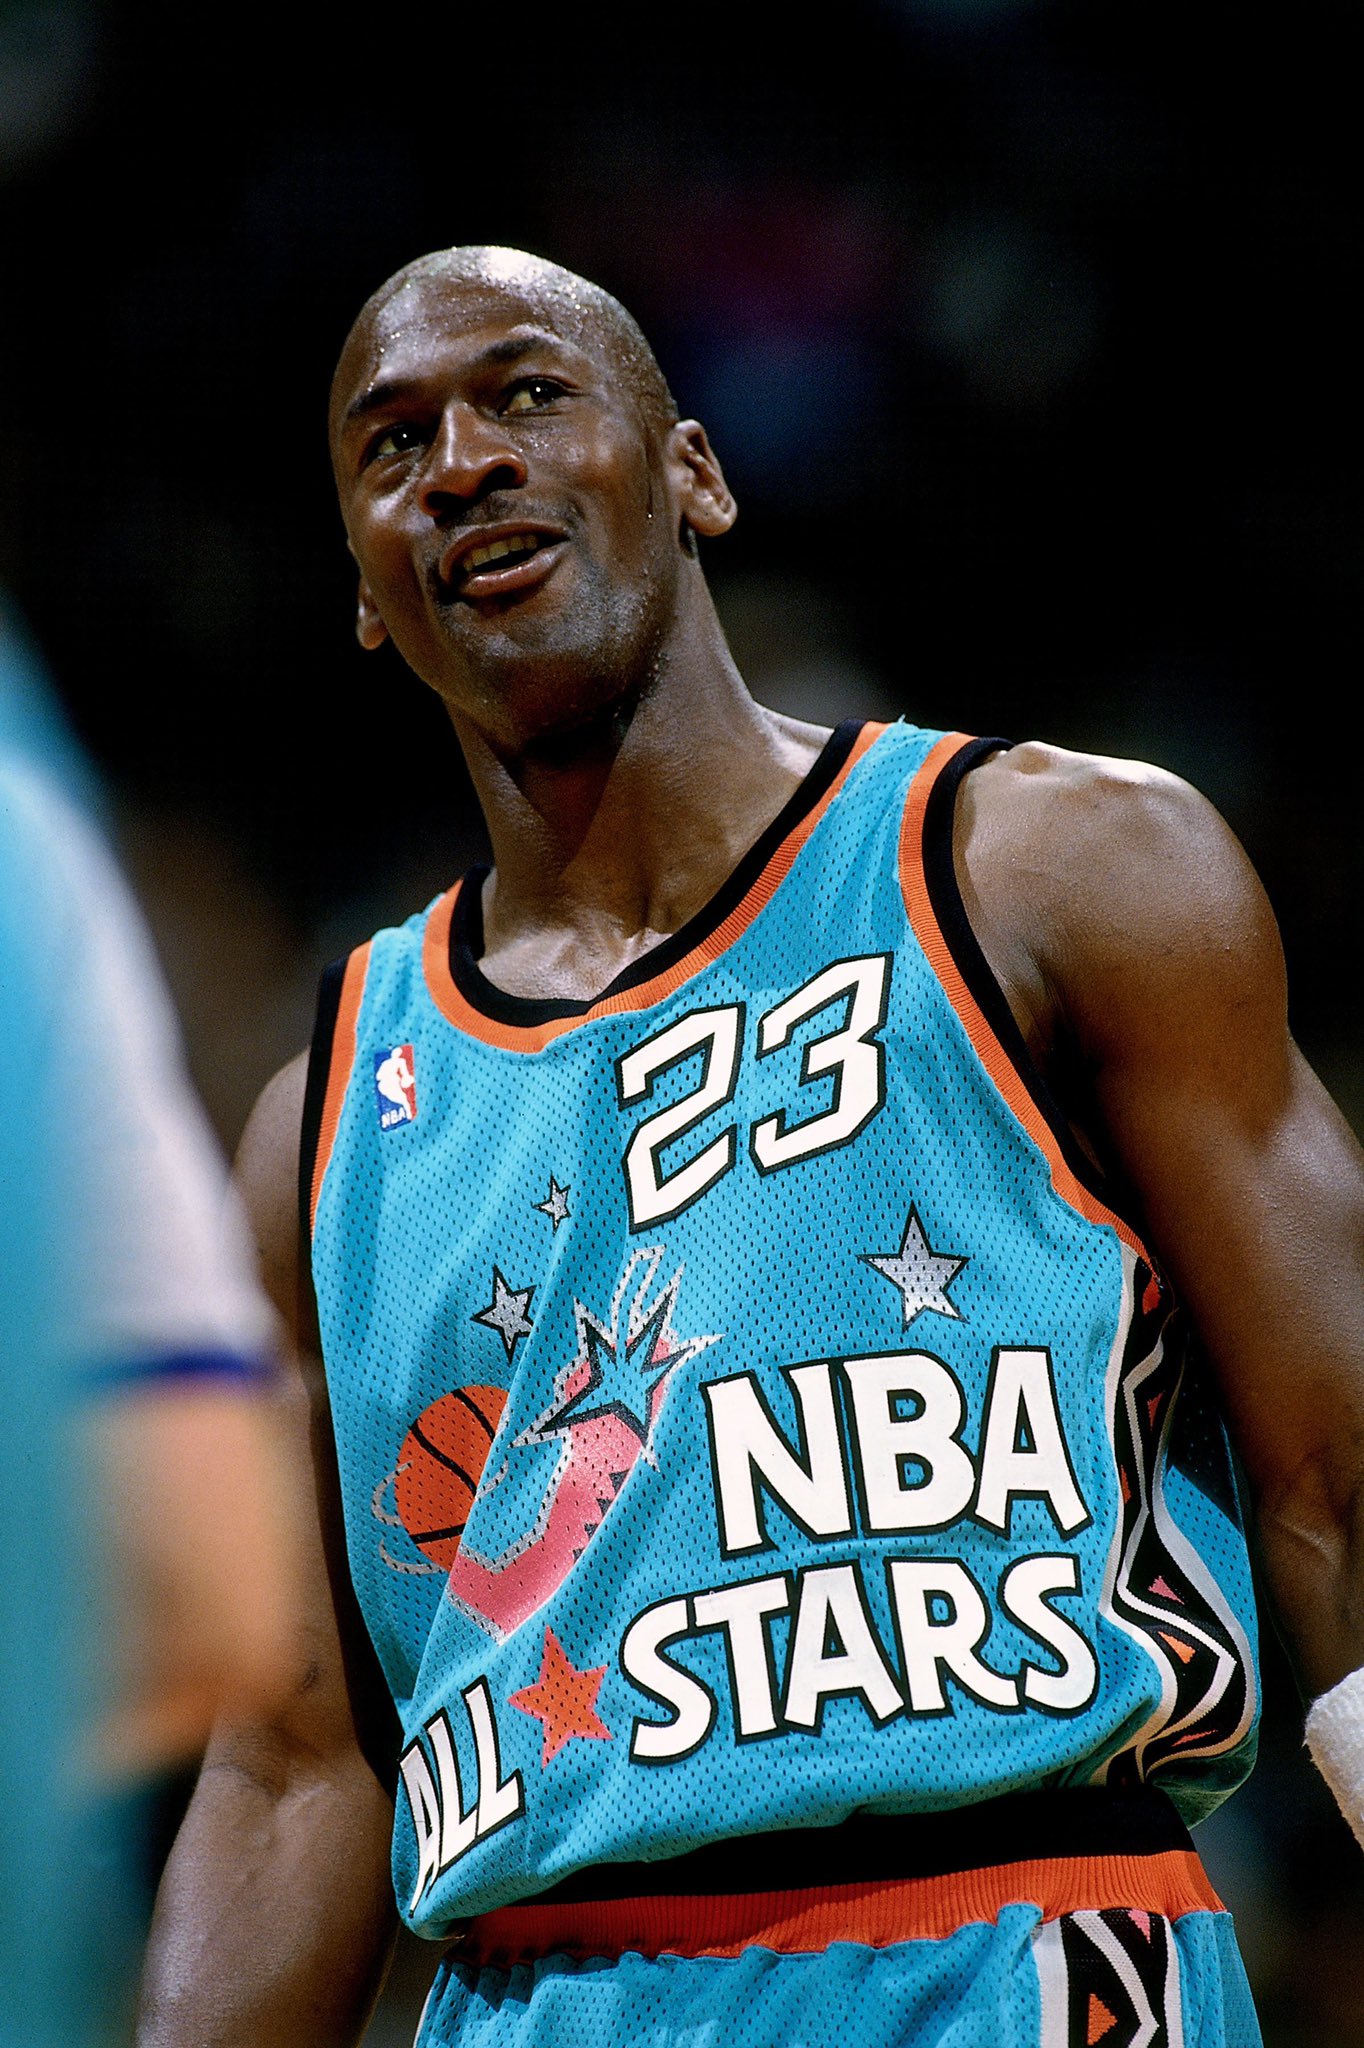 NBA Jersey Database, 1996 NBA All-Star GameAlamodome East 129